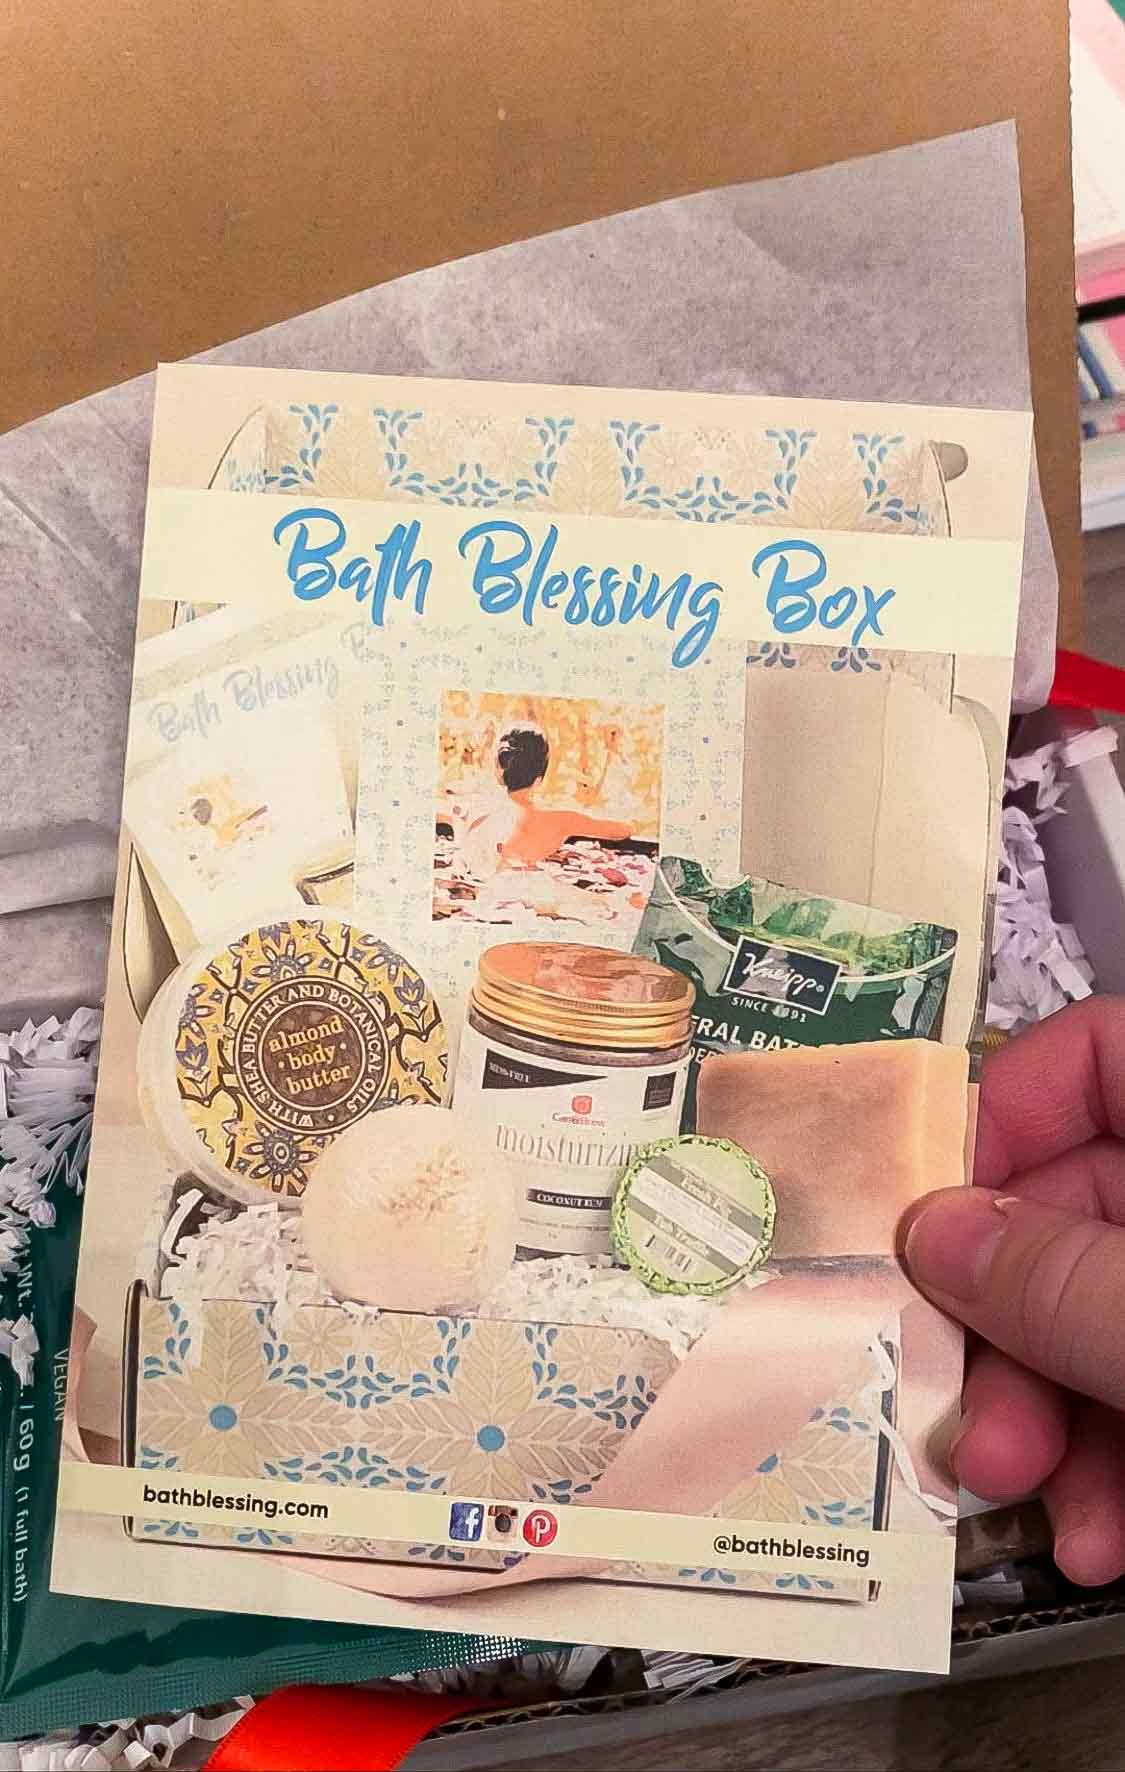 Hand holding a Bath Blessing box brochure